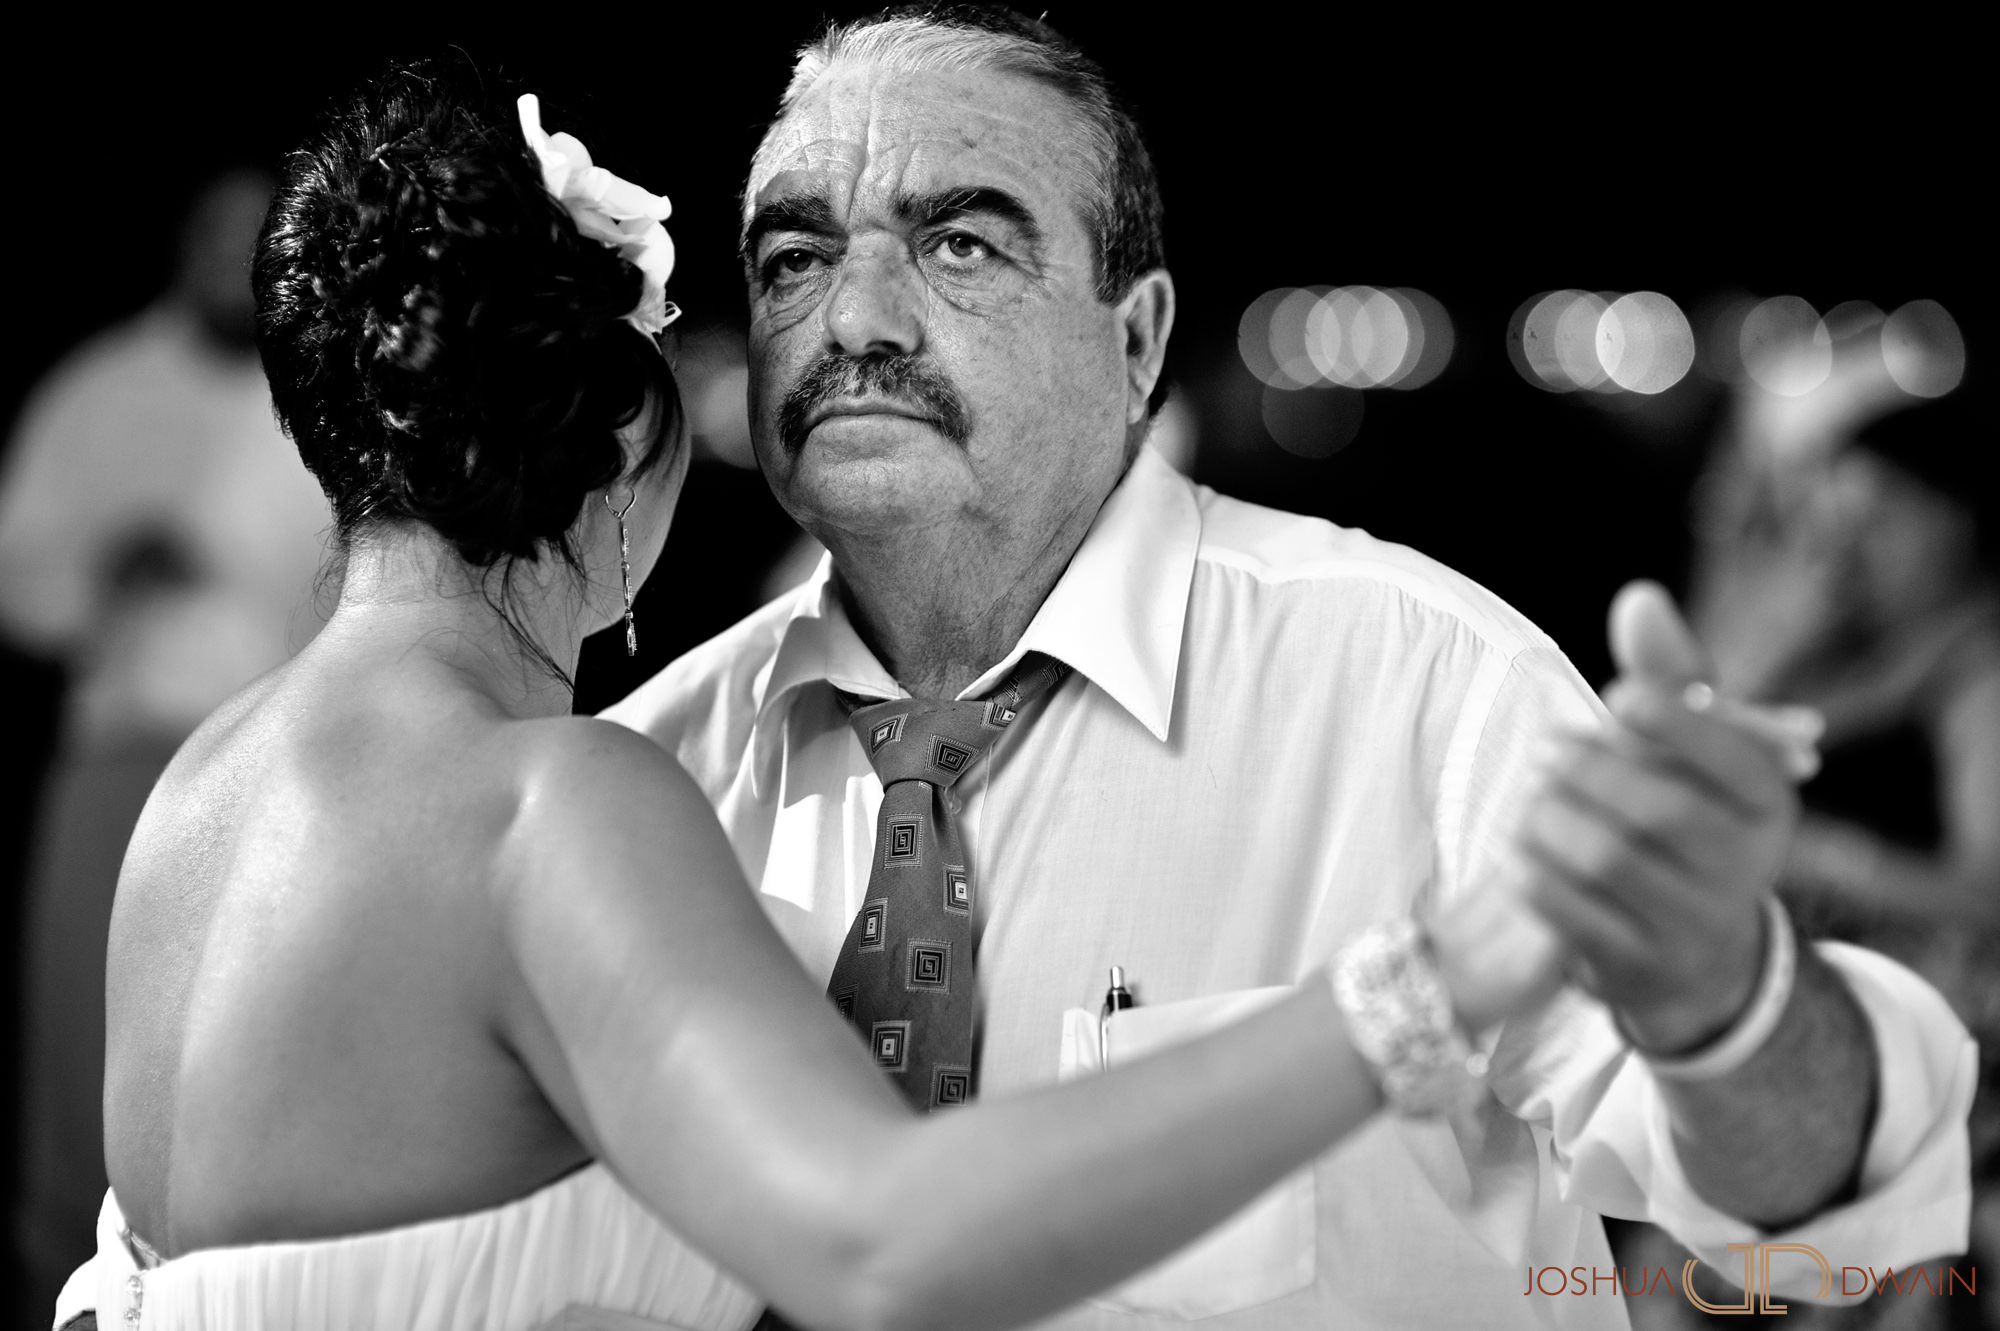 monica-damien--028-hard-rock-cafe-cancun-mexico-wedding-photographer-joshua-dwain-2011-06-11_md_579